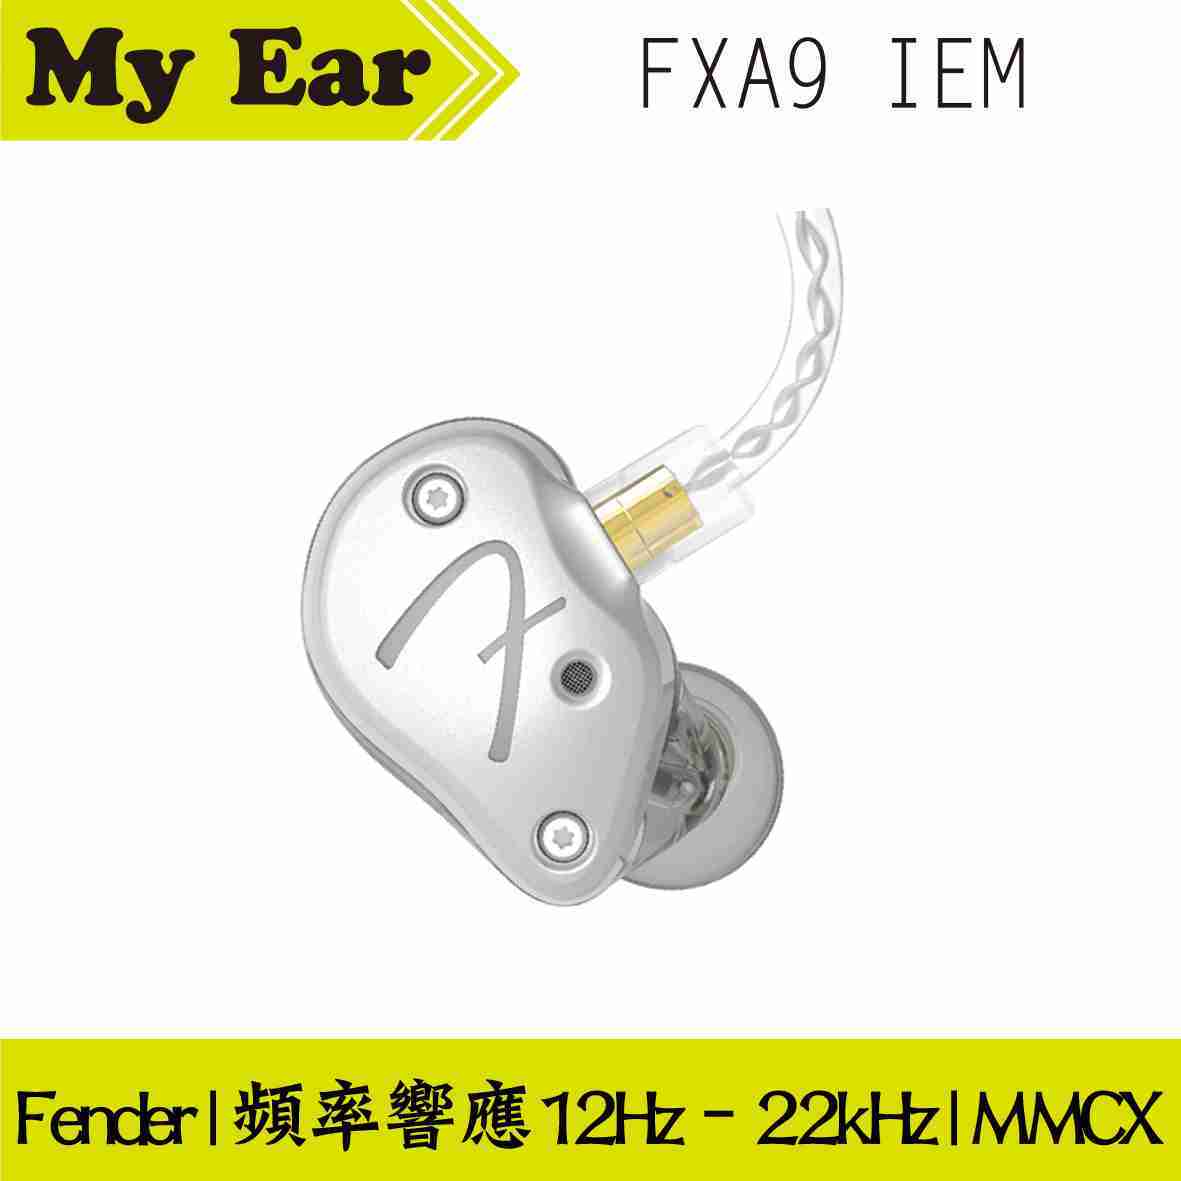 Fender FXA9 IEM 珍珠白 入耳式 監聽級 耳機 | My Ear耳機專門店